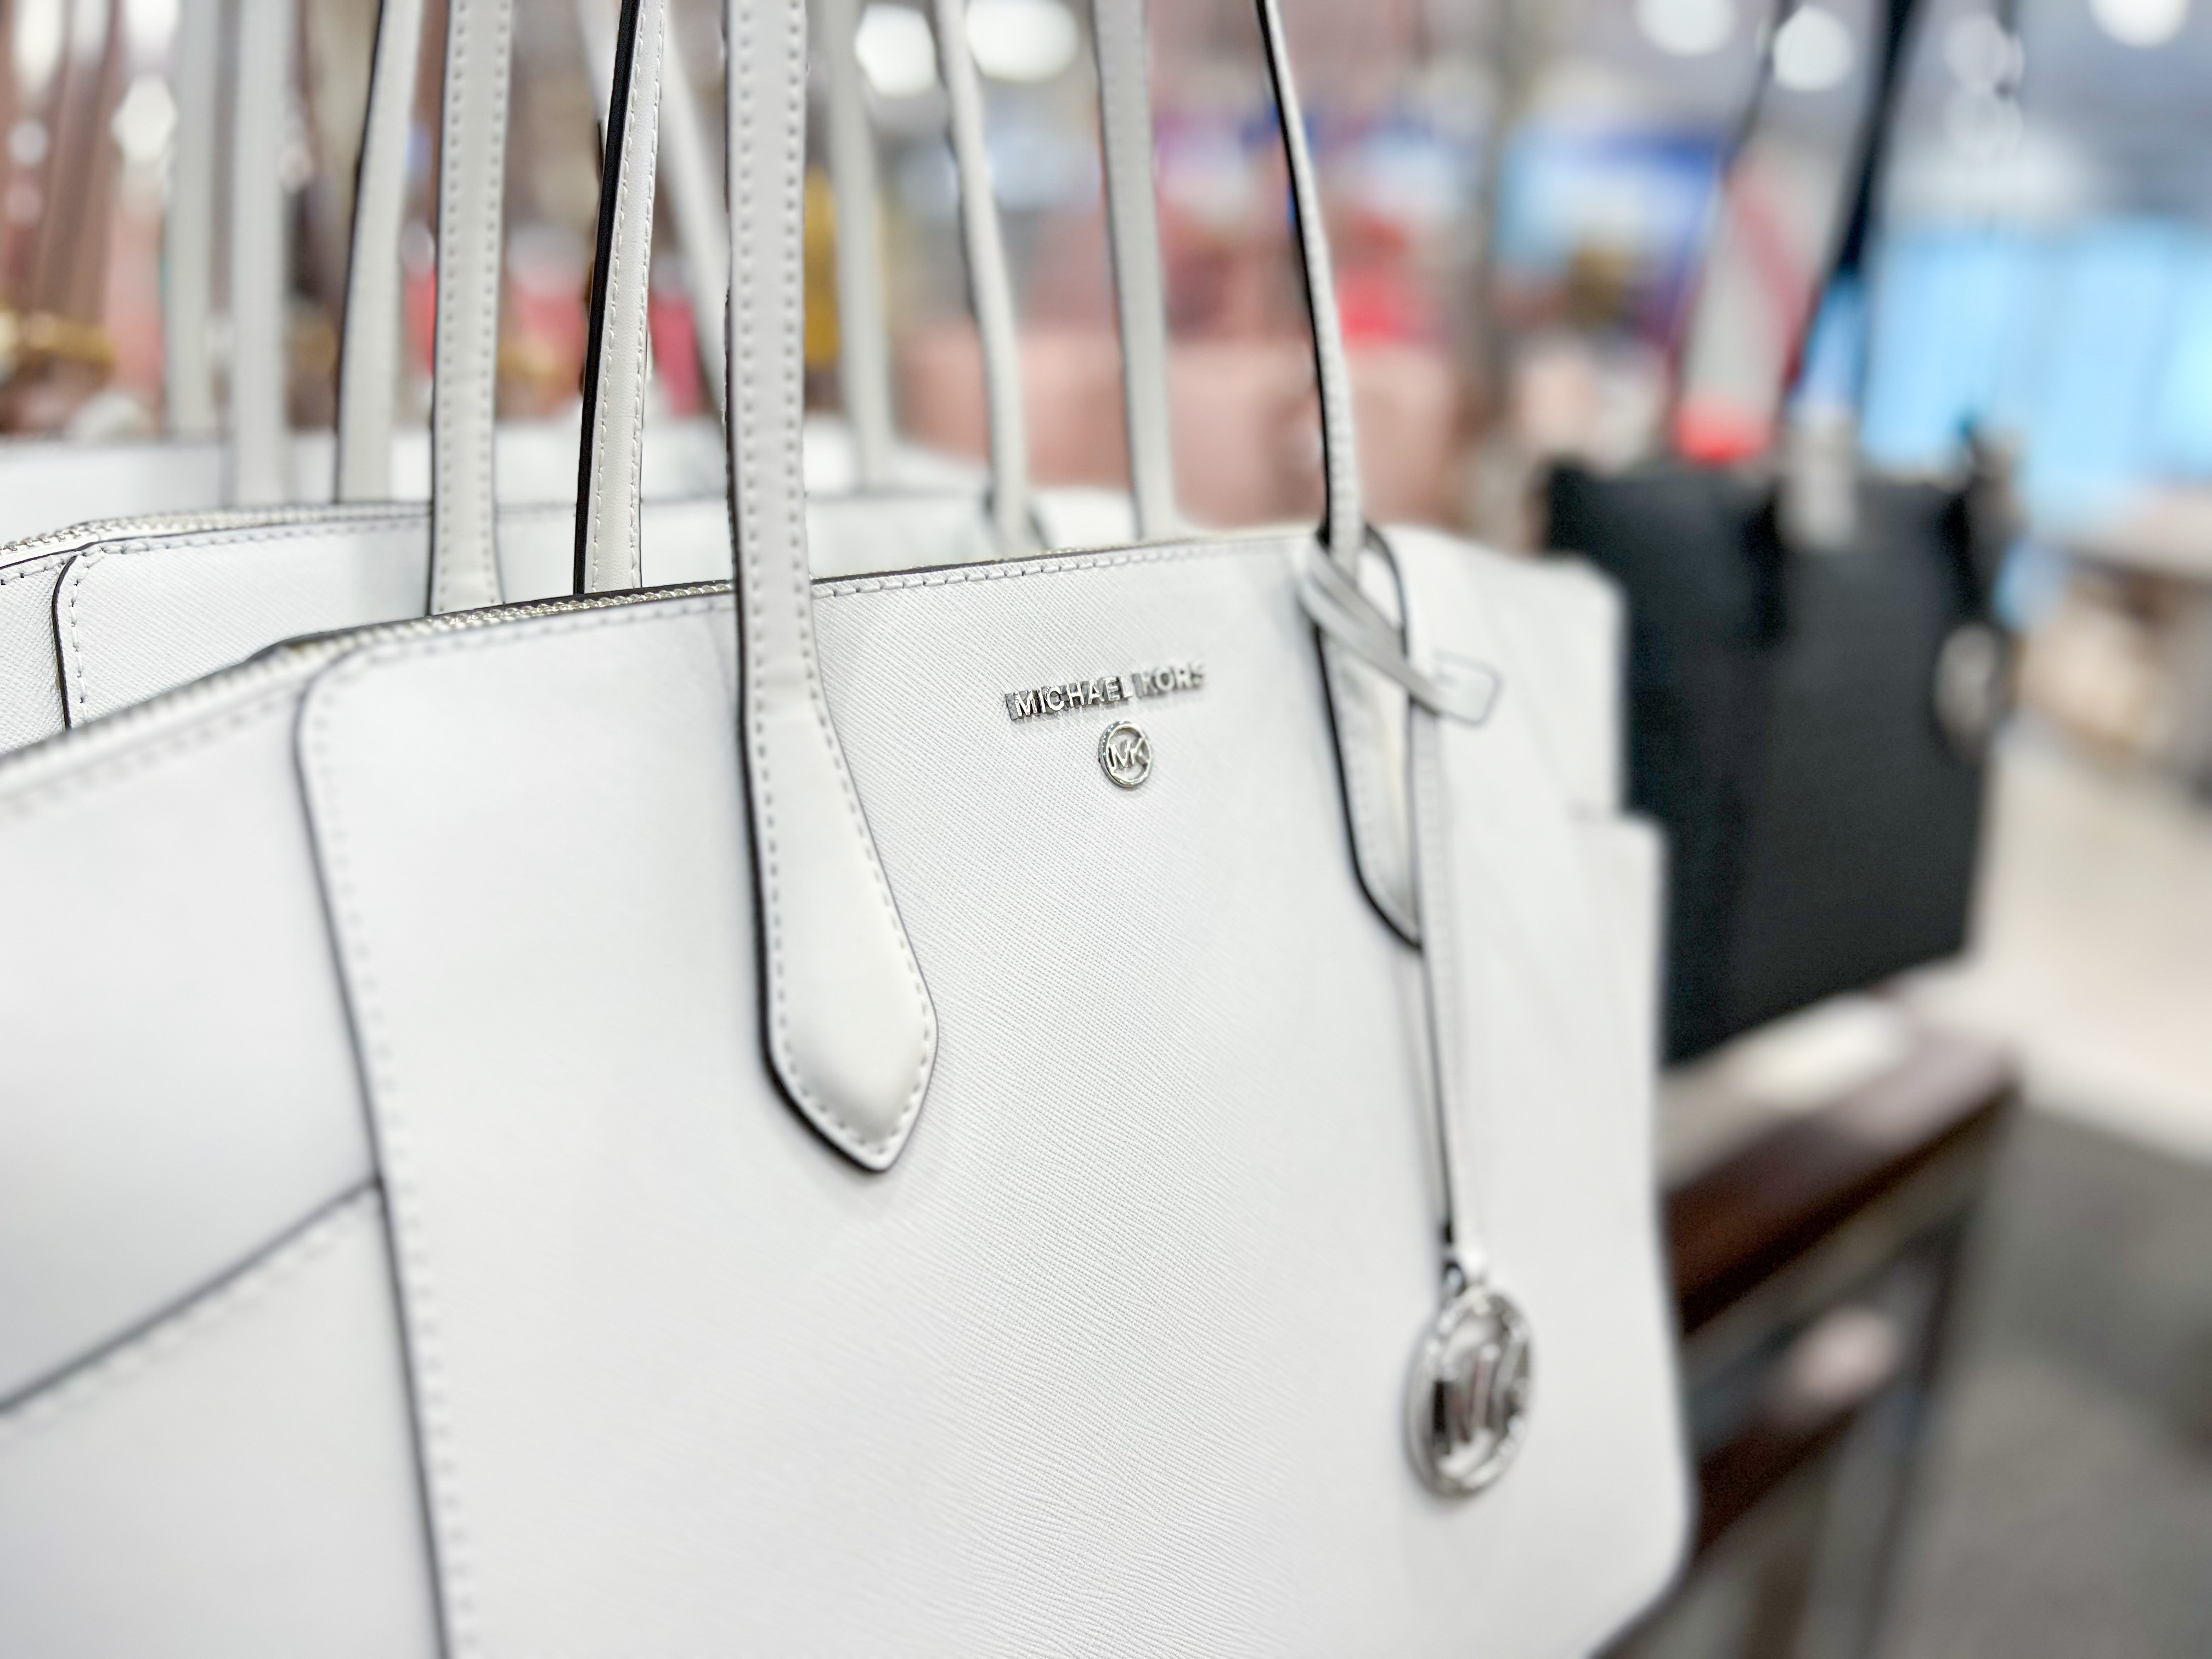 Michael Kors Semi-Annual Sale 2022: Score Up to 50% Off Handbags